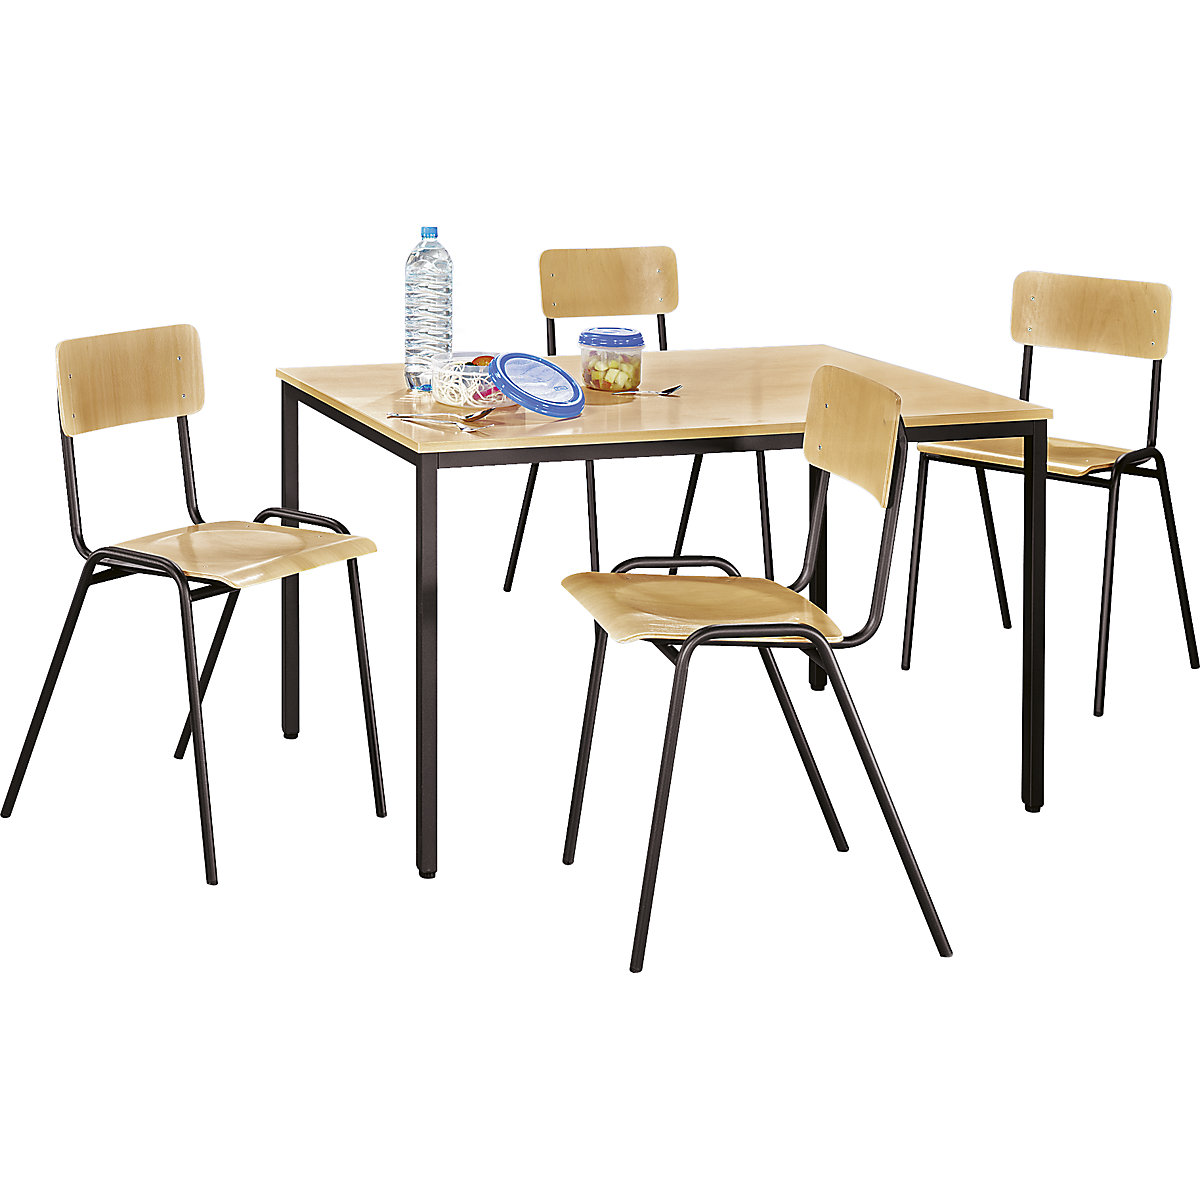 Universele zitgroep – eurokraft basic, 1 tafel, 4 stoelen, tafelblad beukenhoutdecor, frame grijsbruin